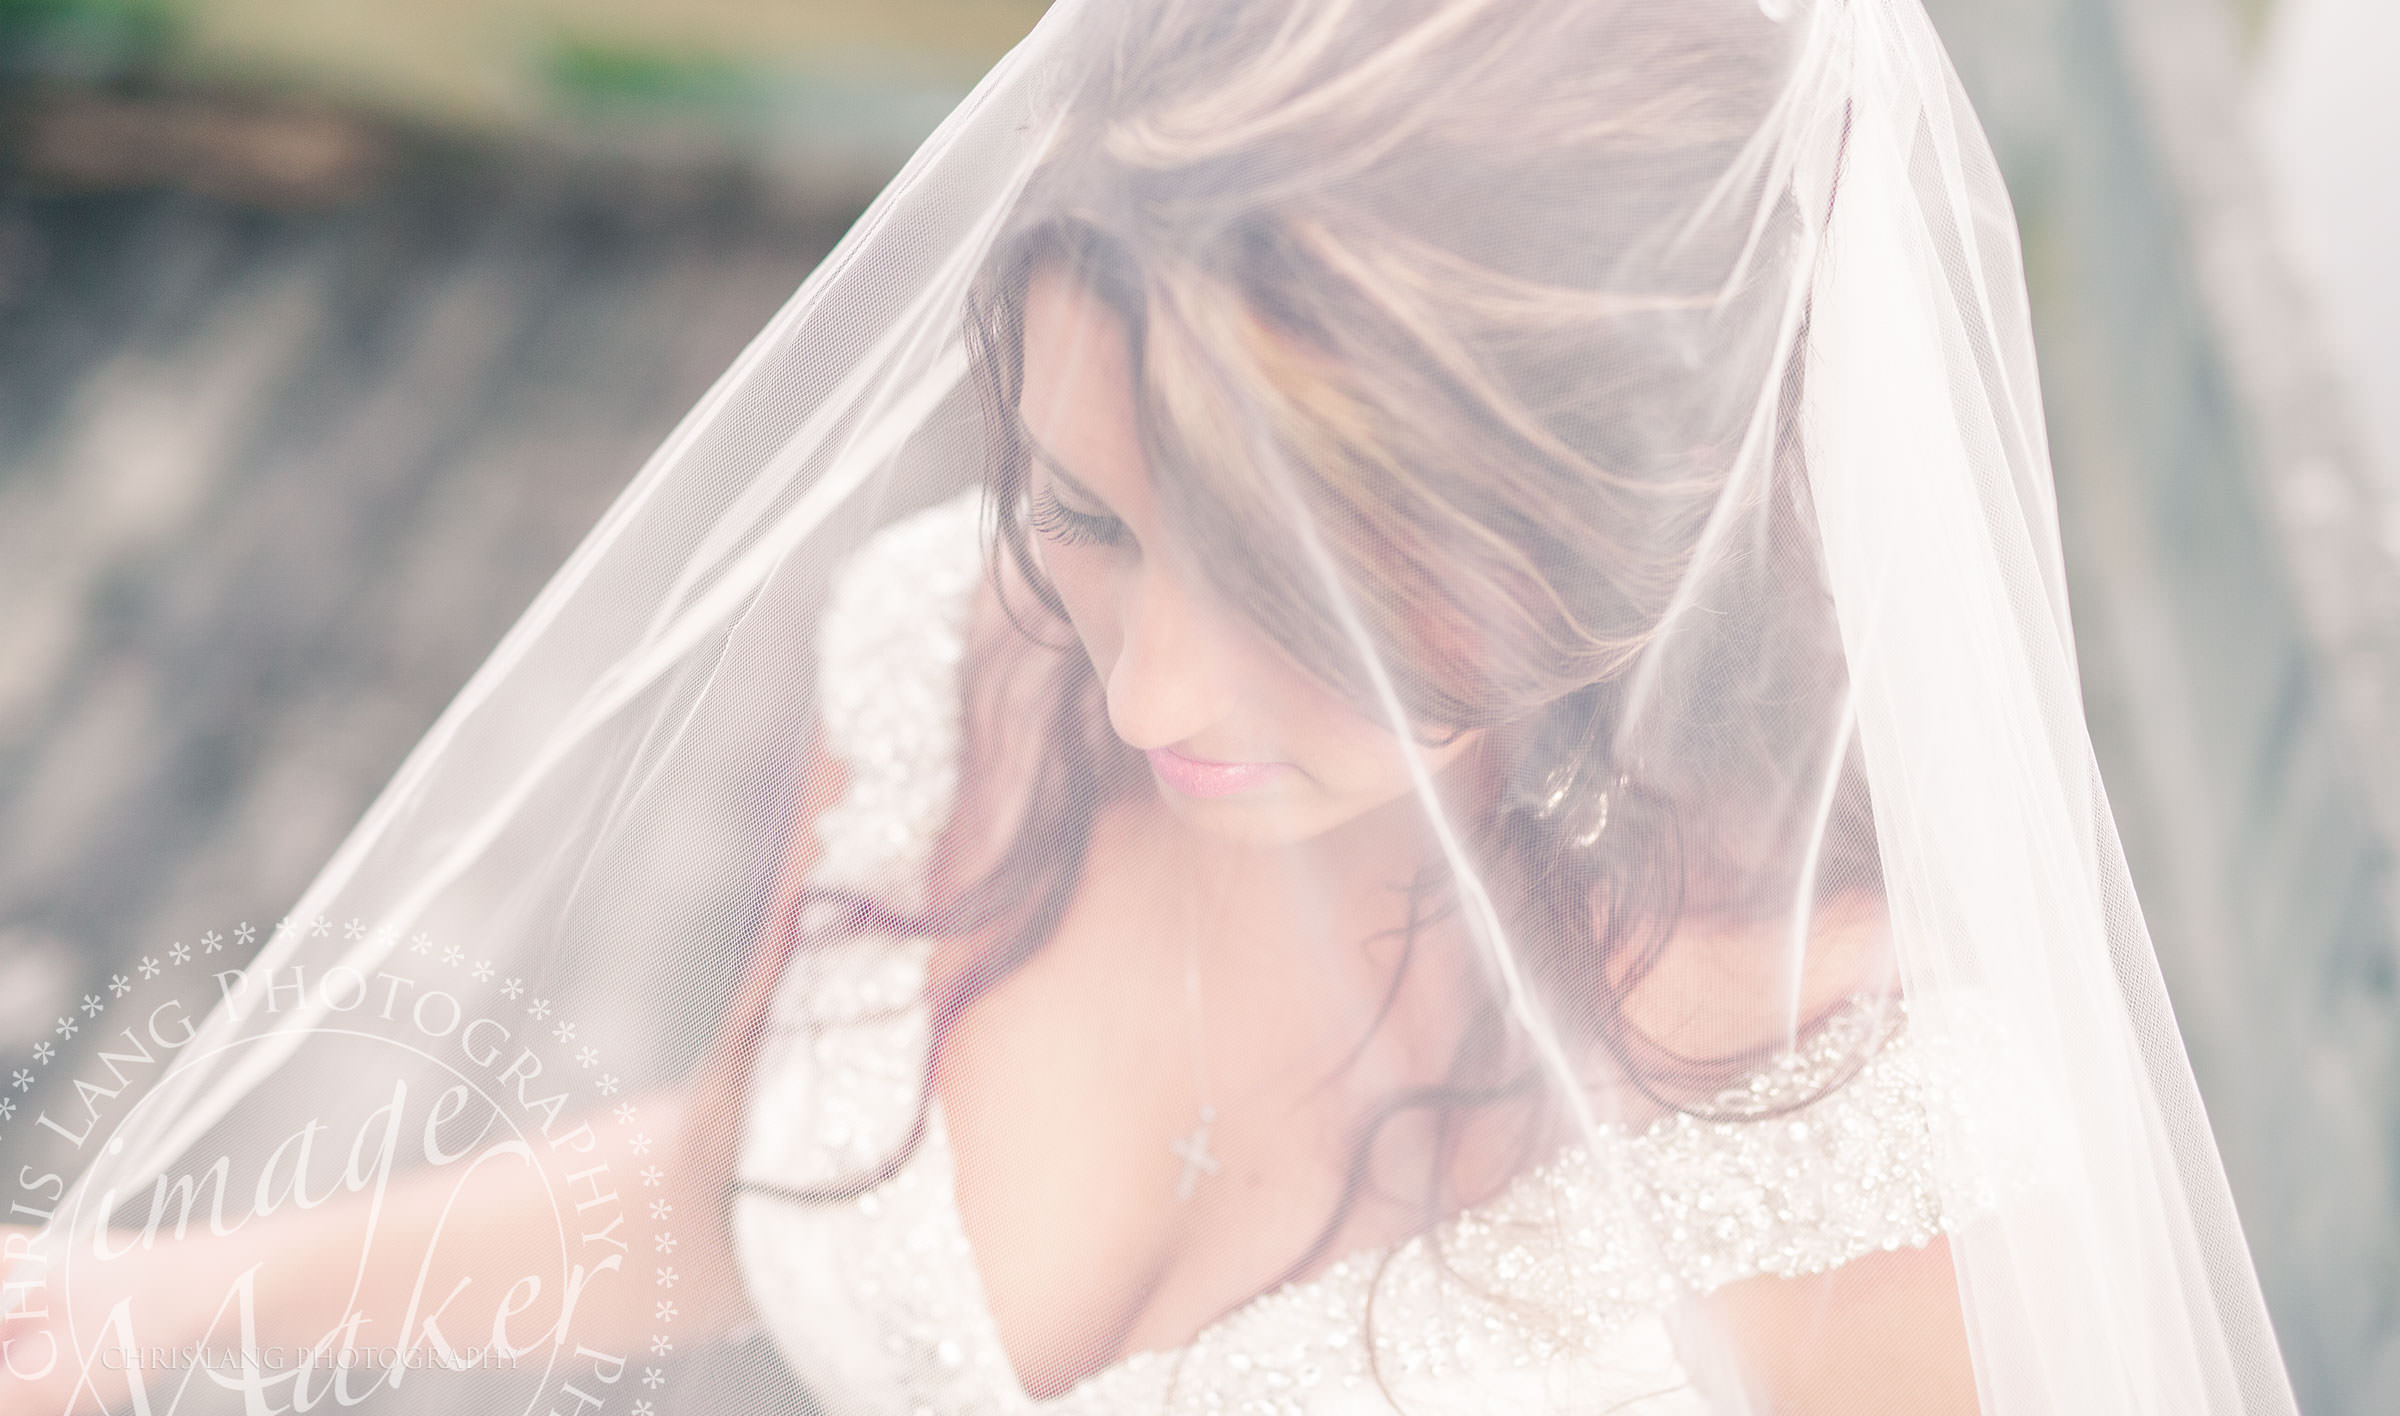 bride & veil - brides - photos - wedding dress - bridal ideas - wedding day - wilmington nc wedding photography